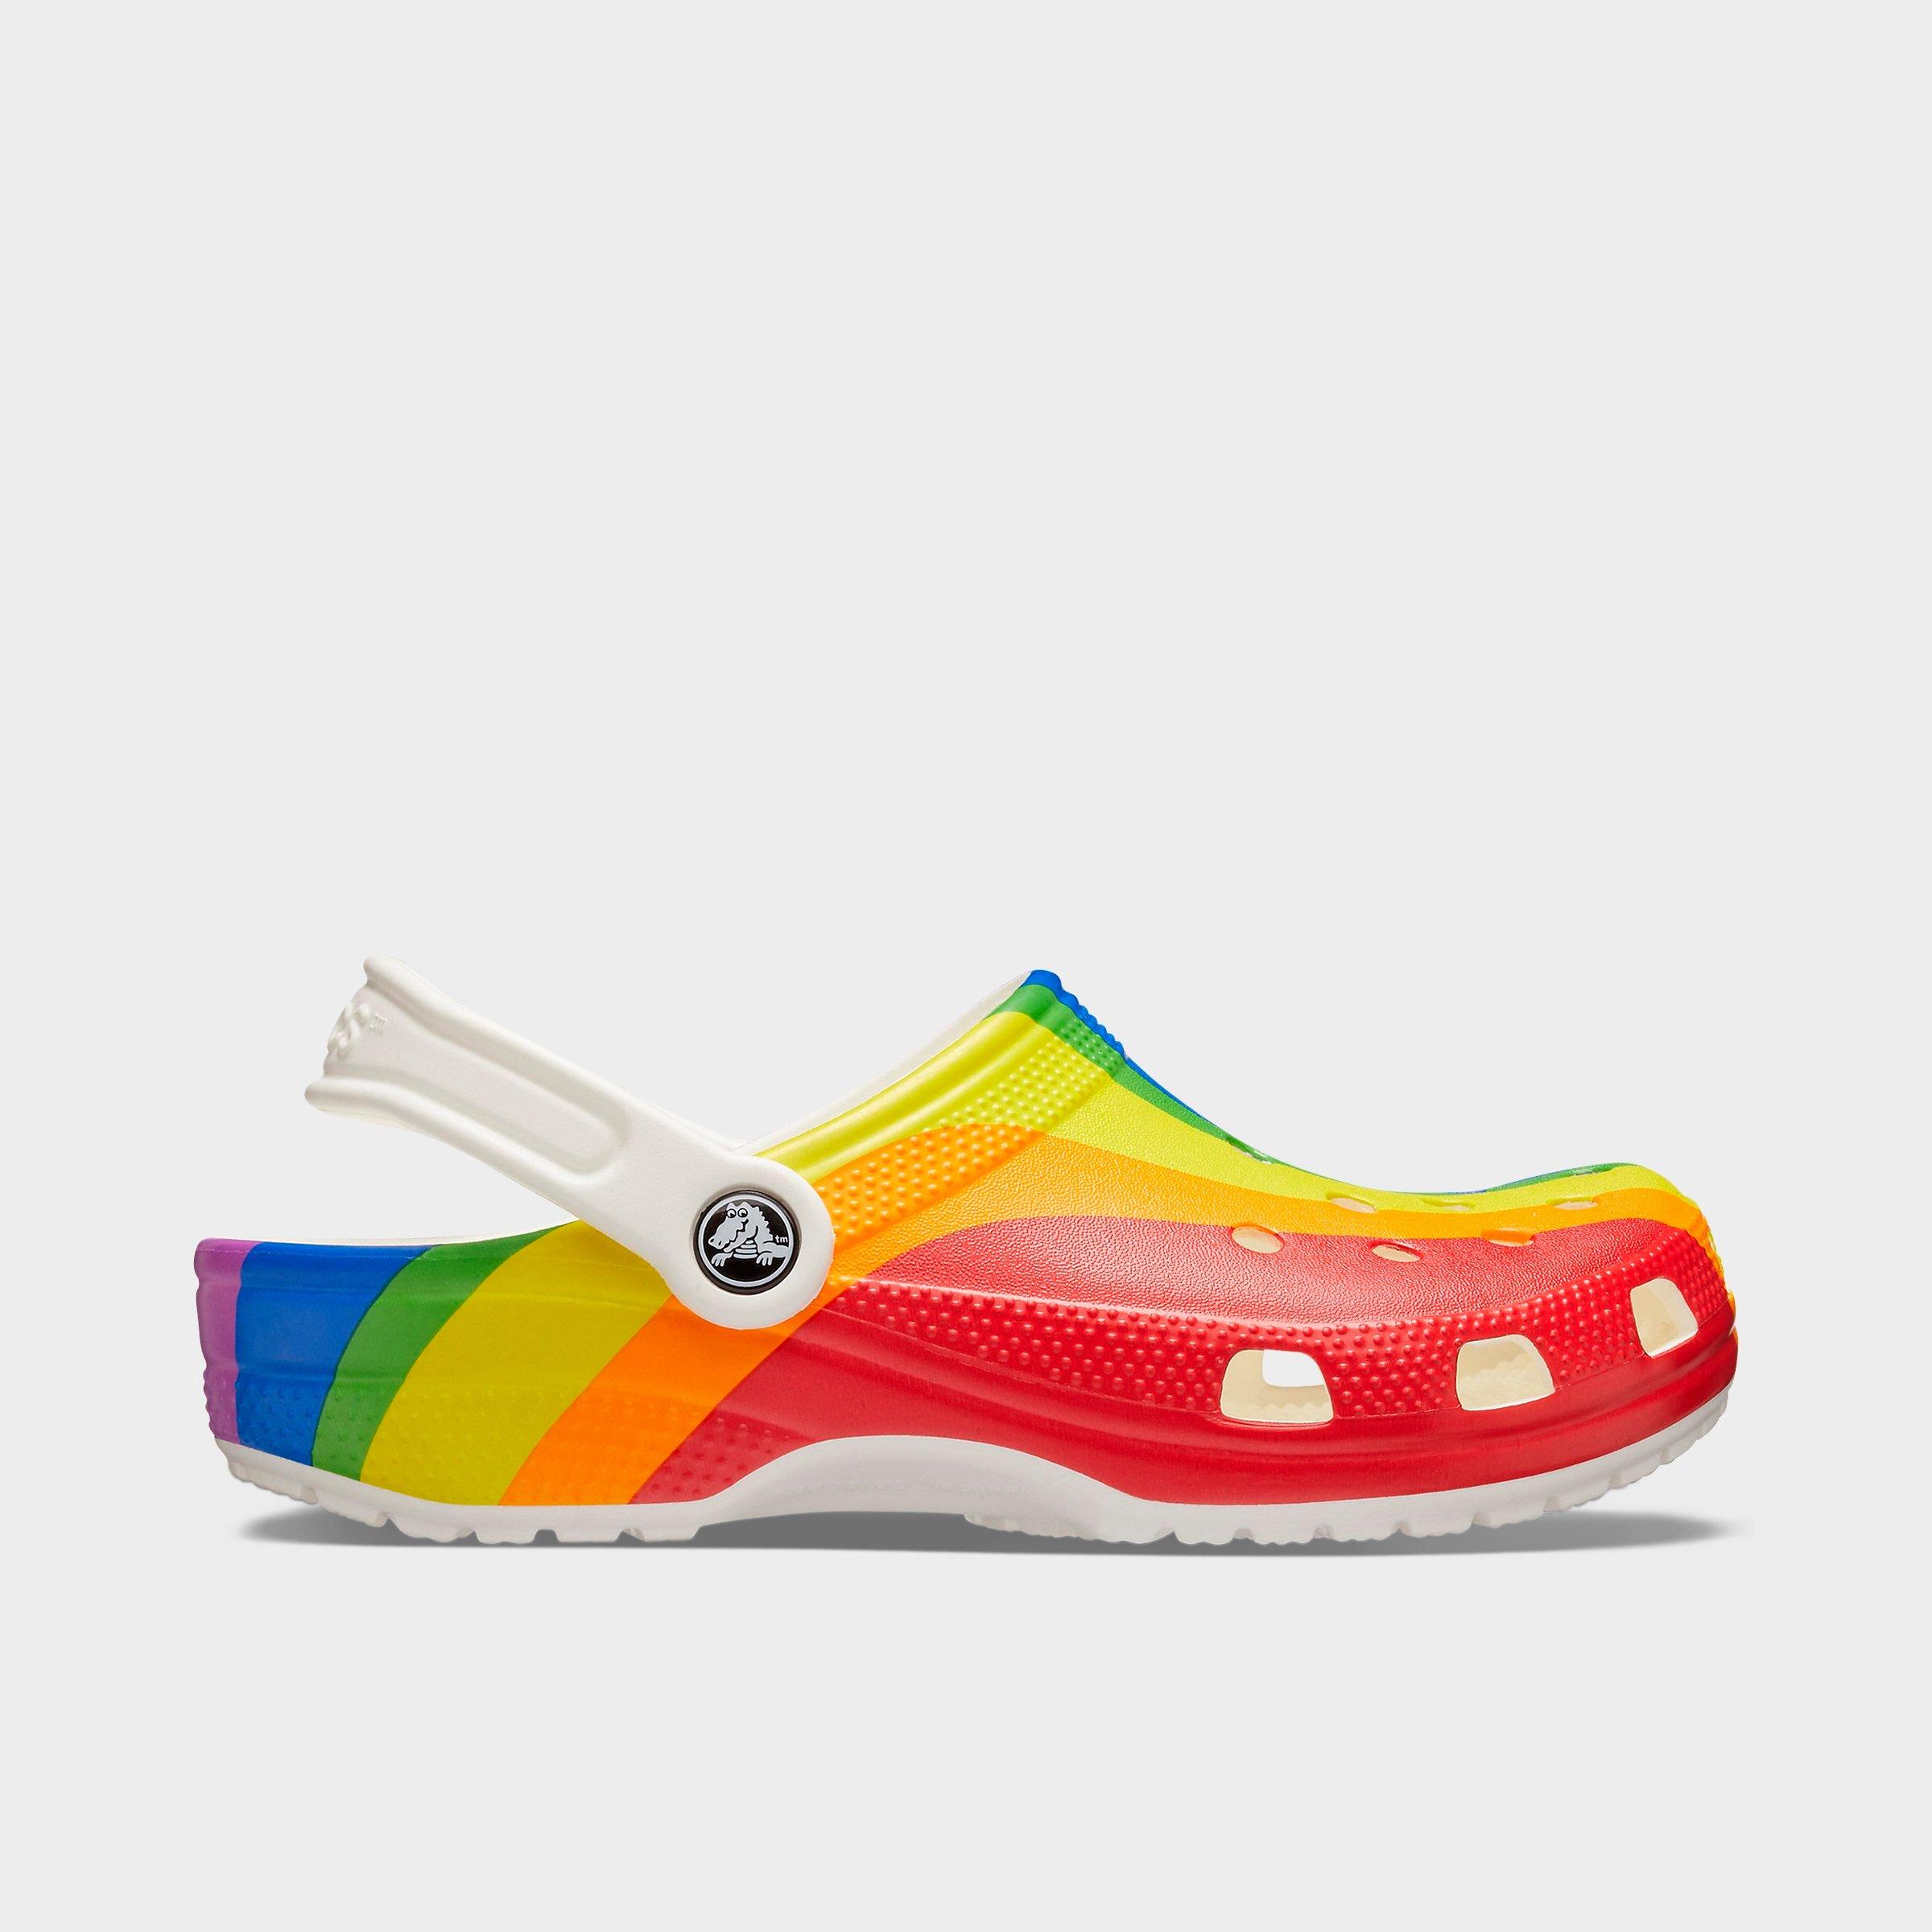 crocs with rainbow words